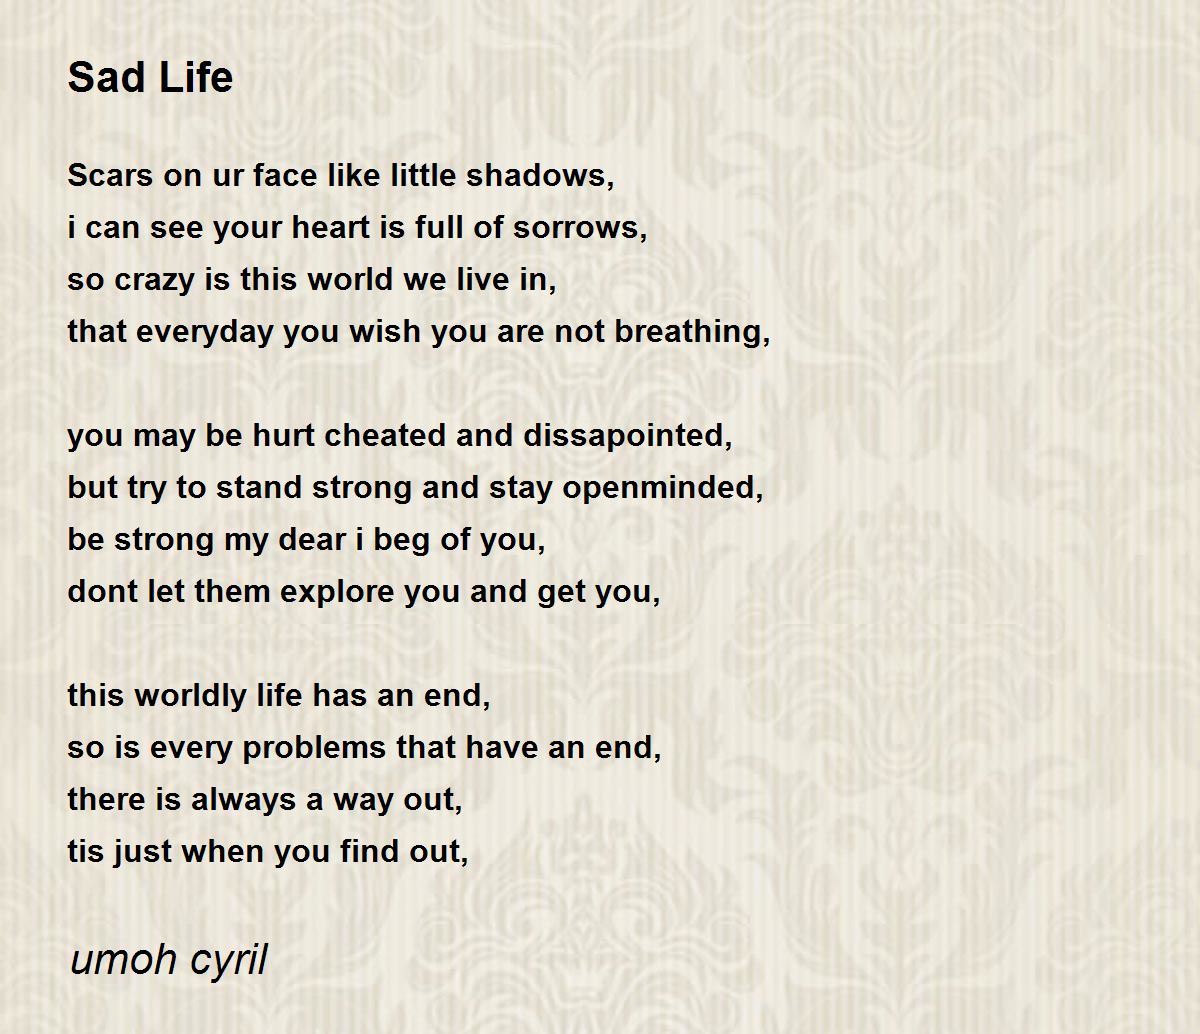 Sad Life - Sad Life Poem by umoh cyril